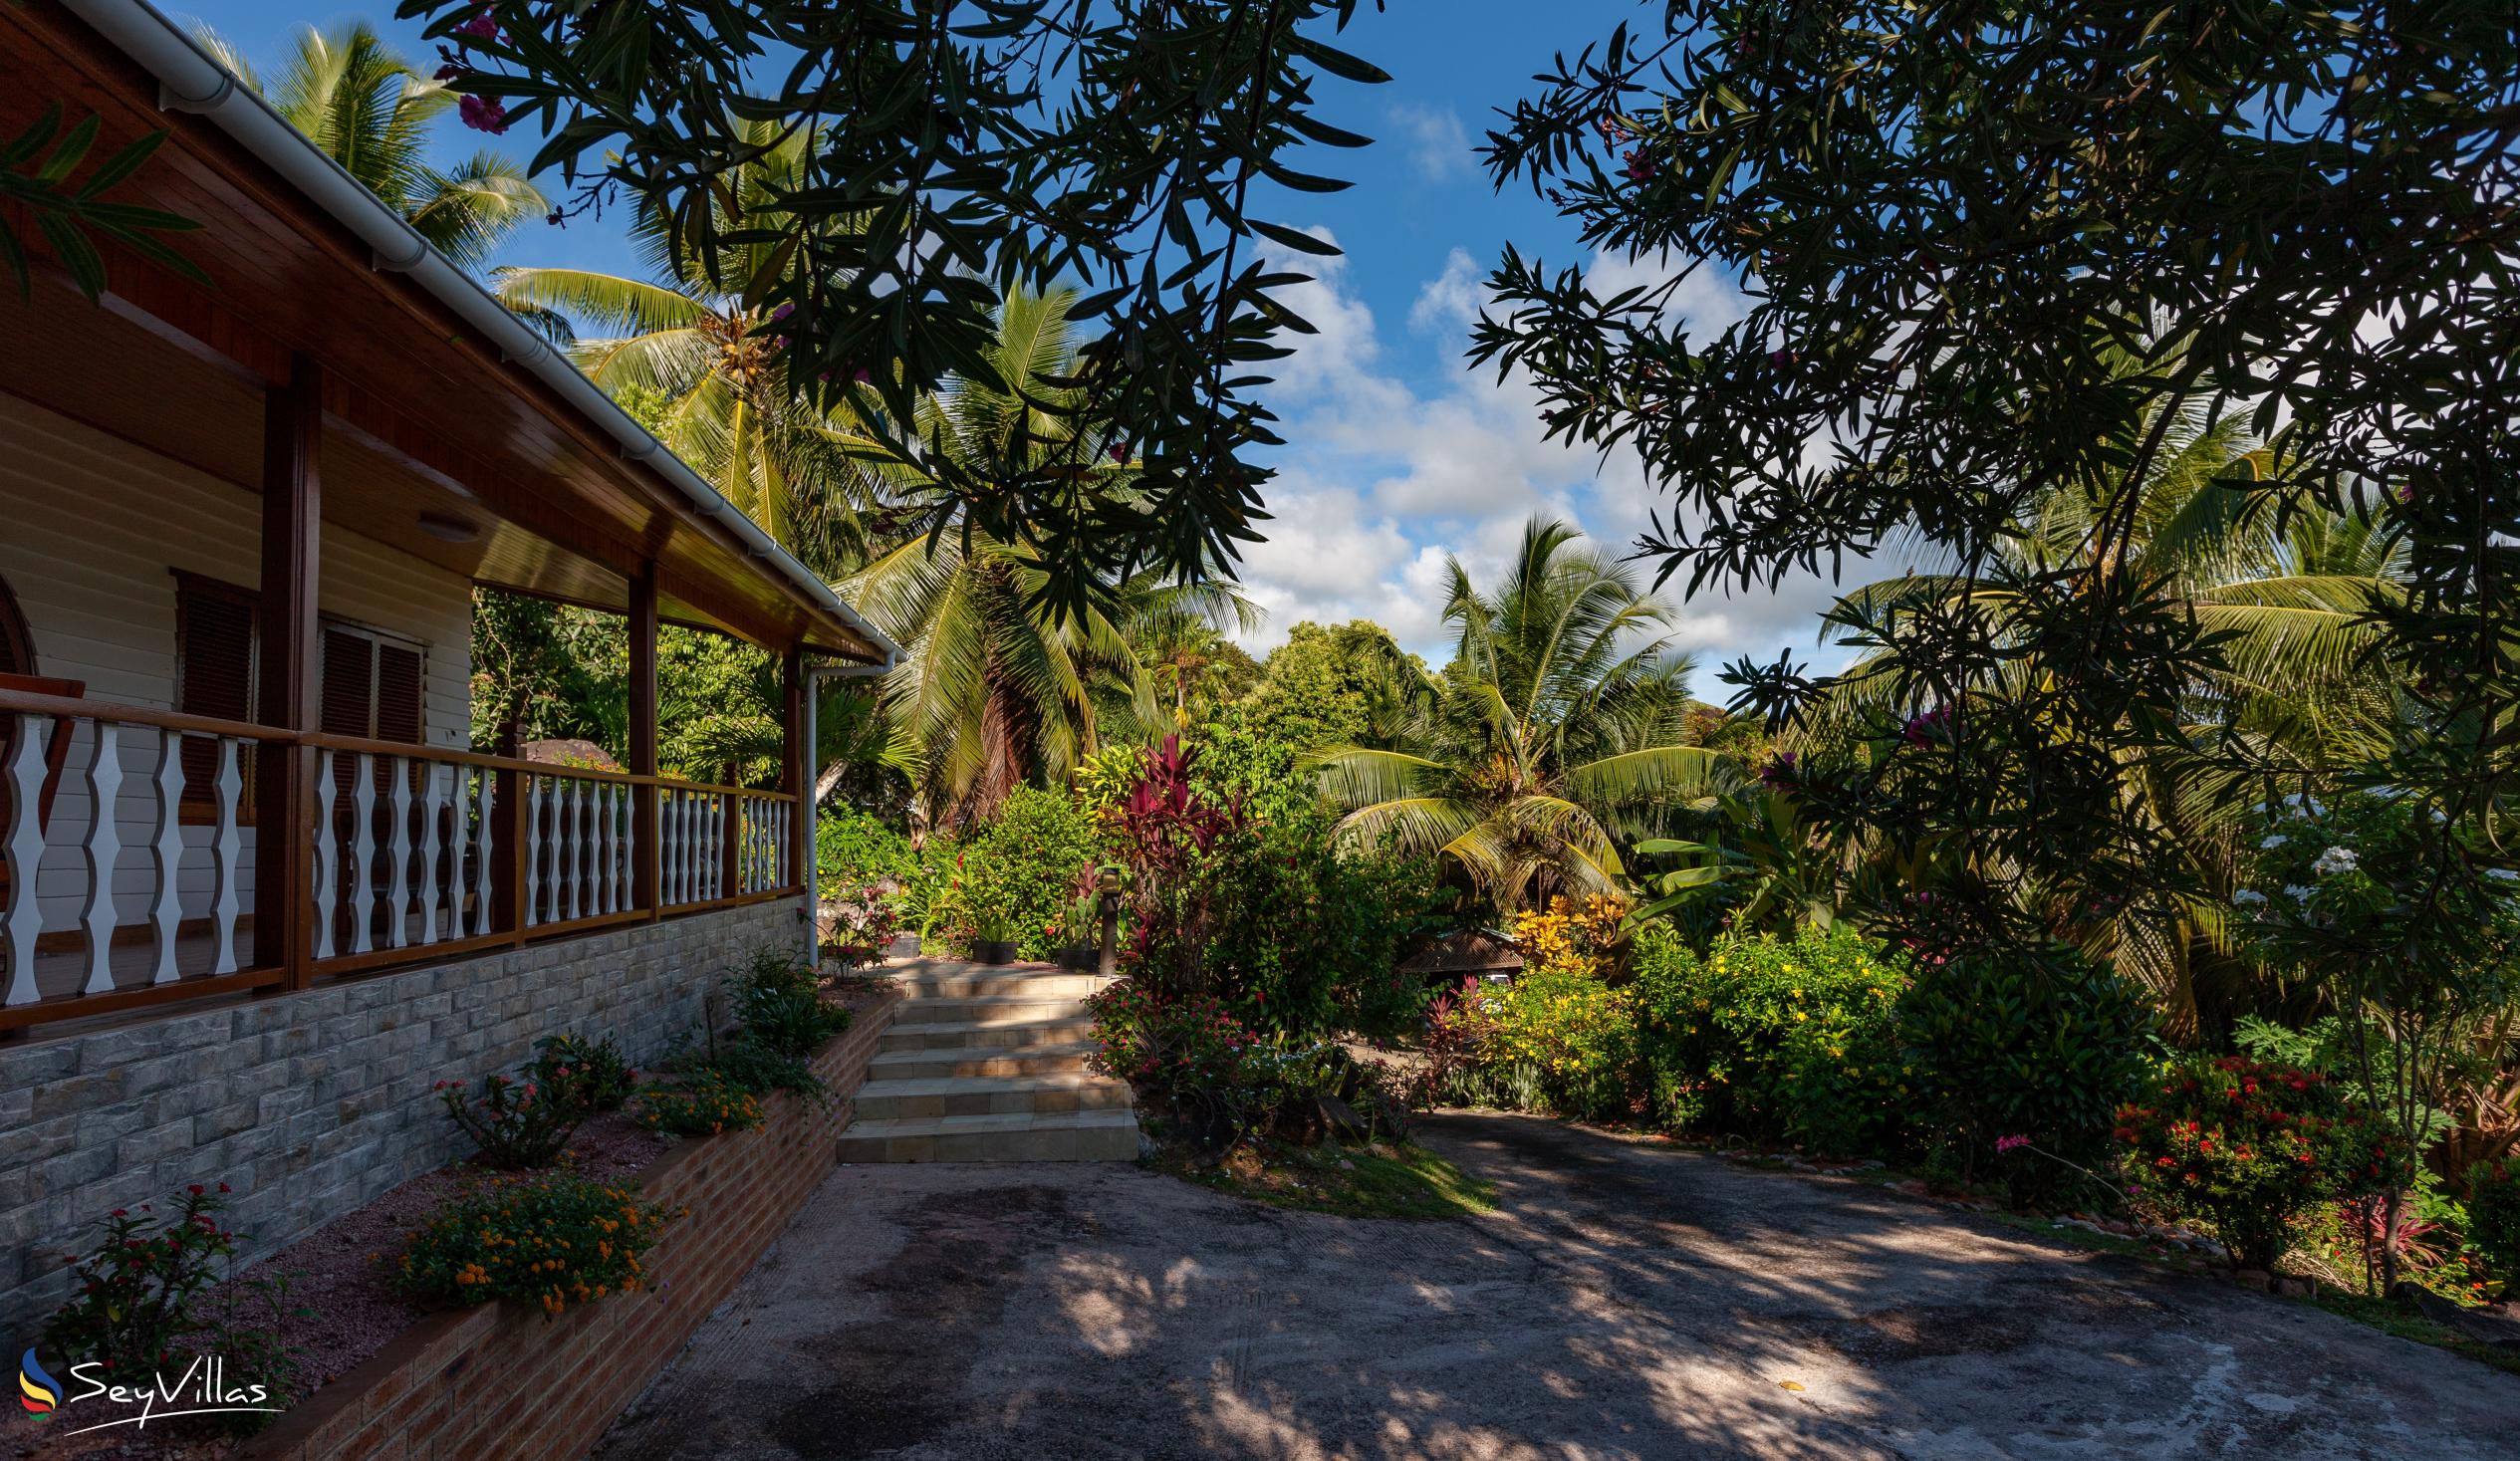 Foto 8: Le Grand Bleu Villas - Aussenbereich - Praslin (Seychellen)